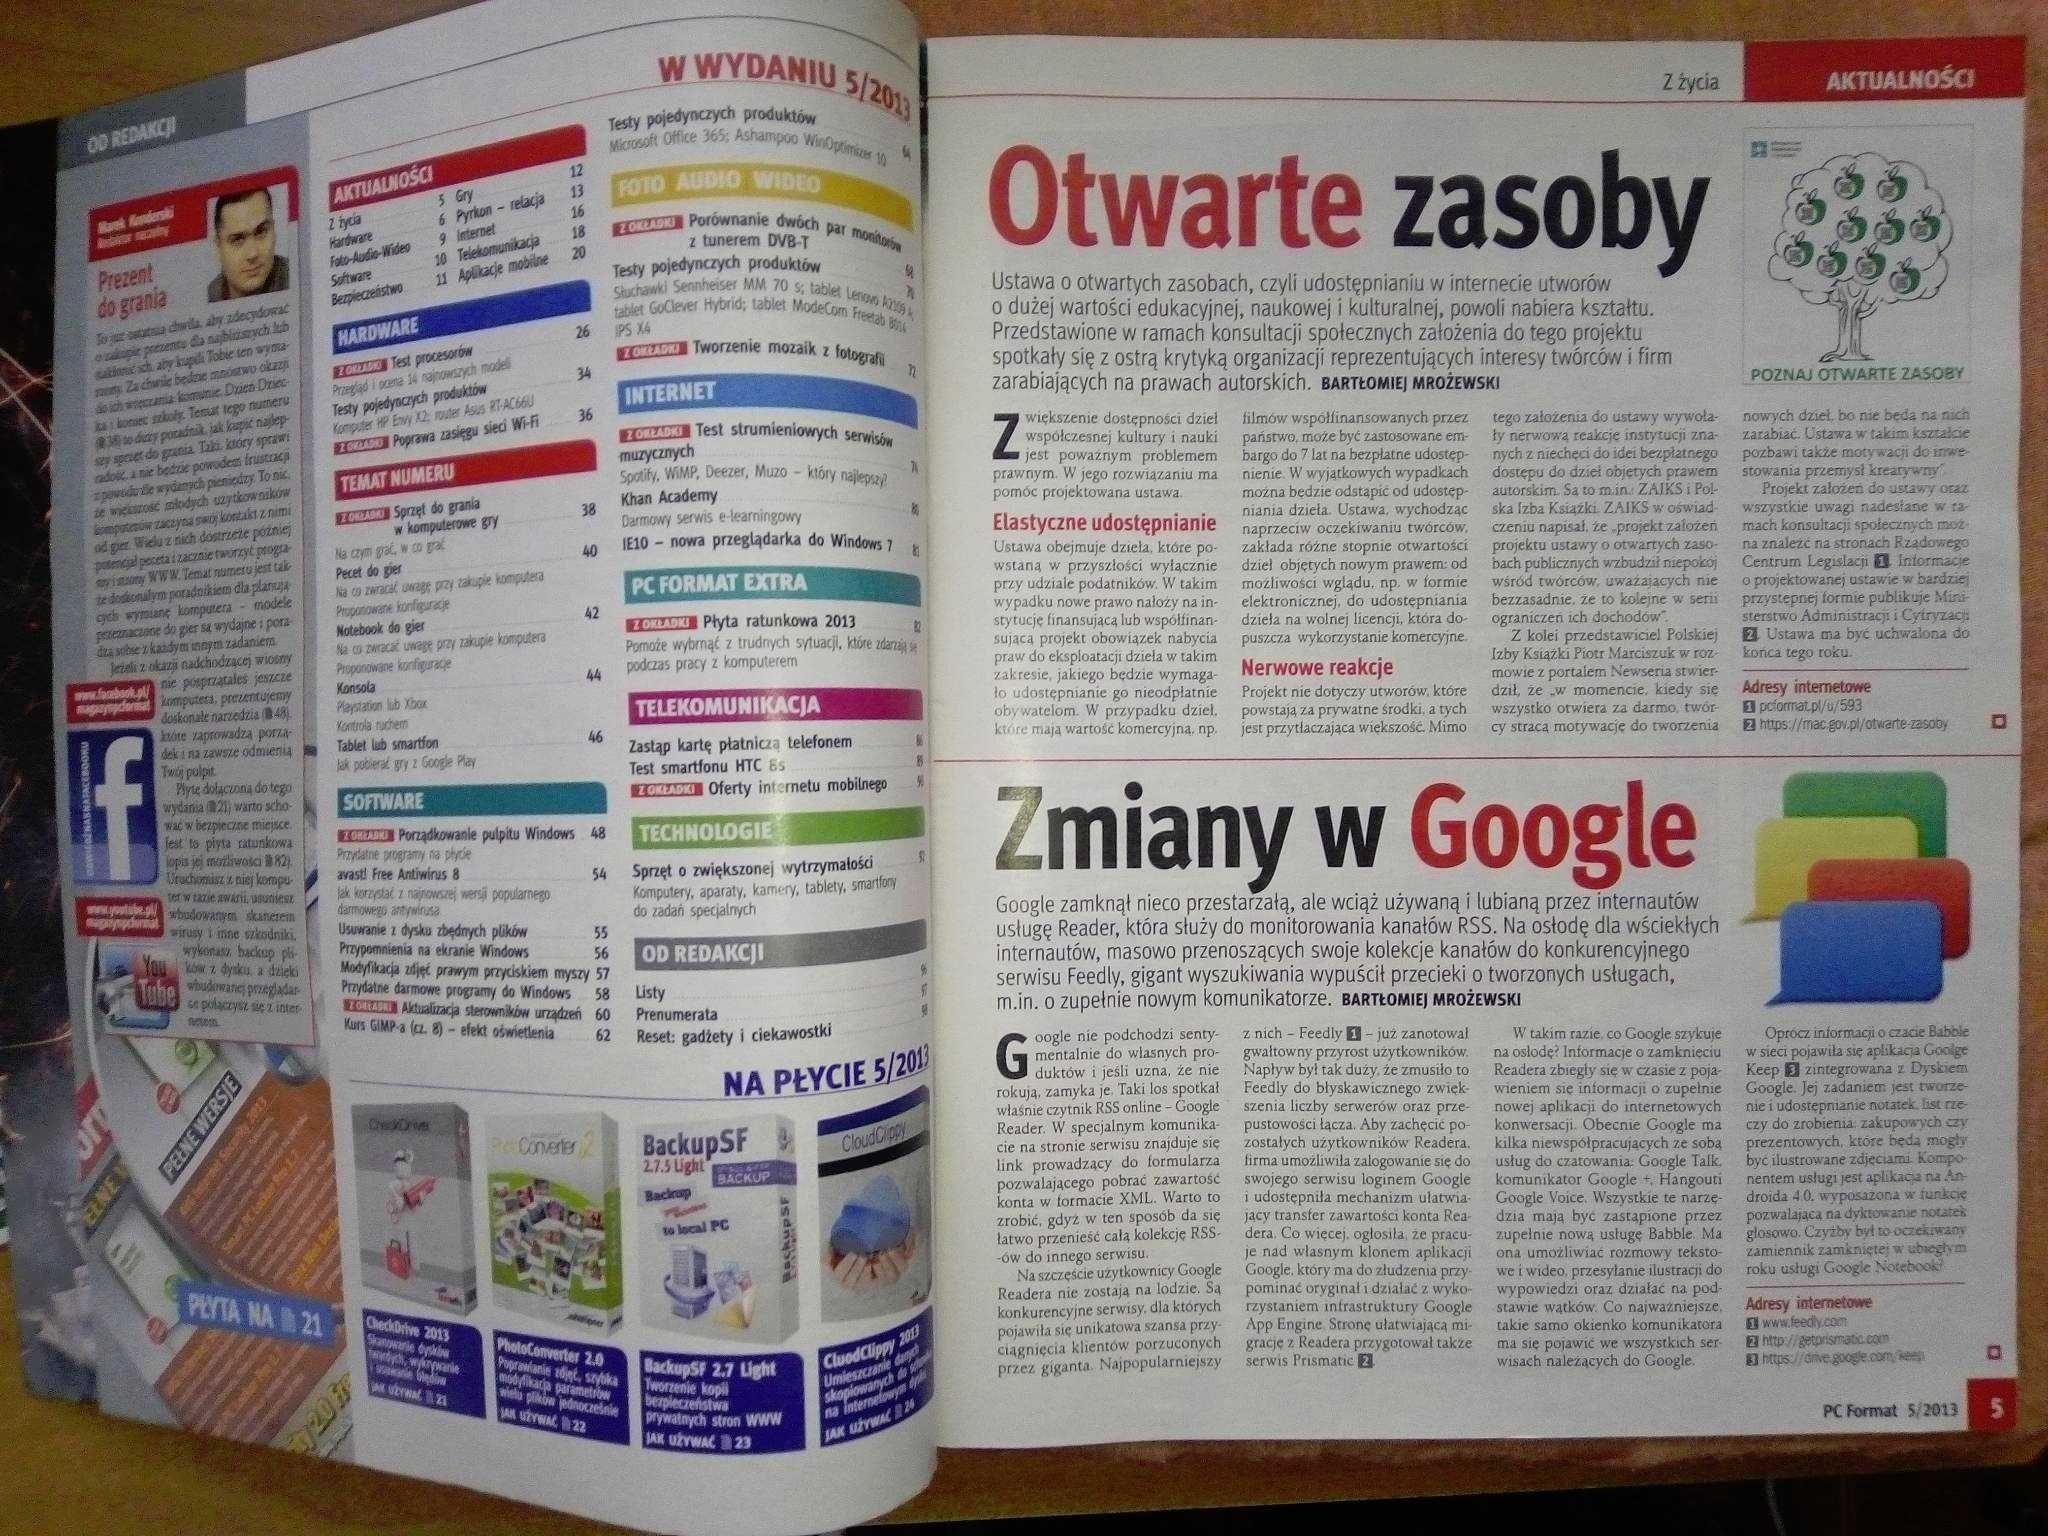 PC Format 5 2013 maj (153) Gazeta + płyta CD Czasopismo